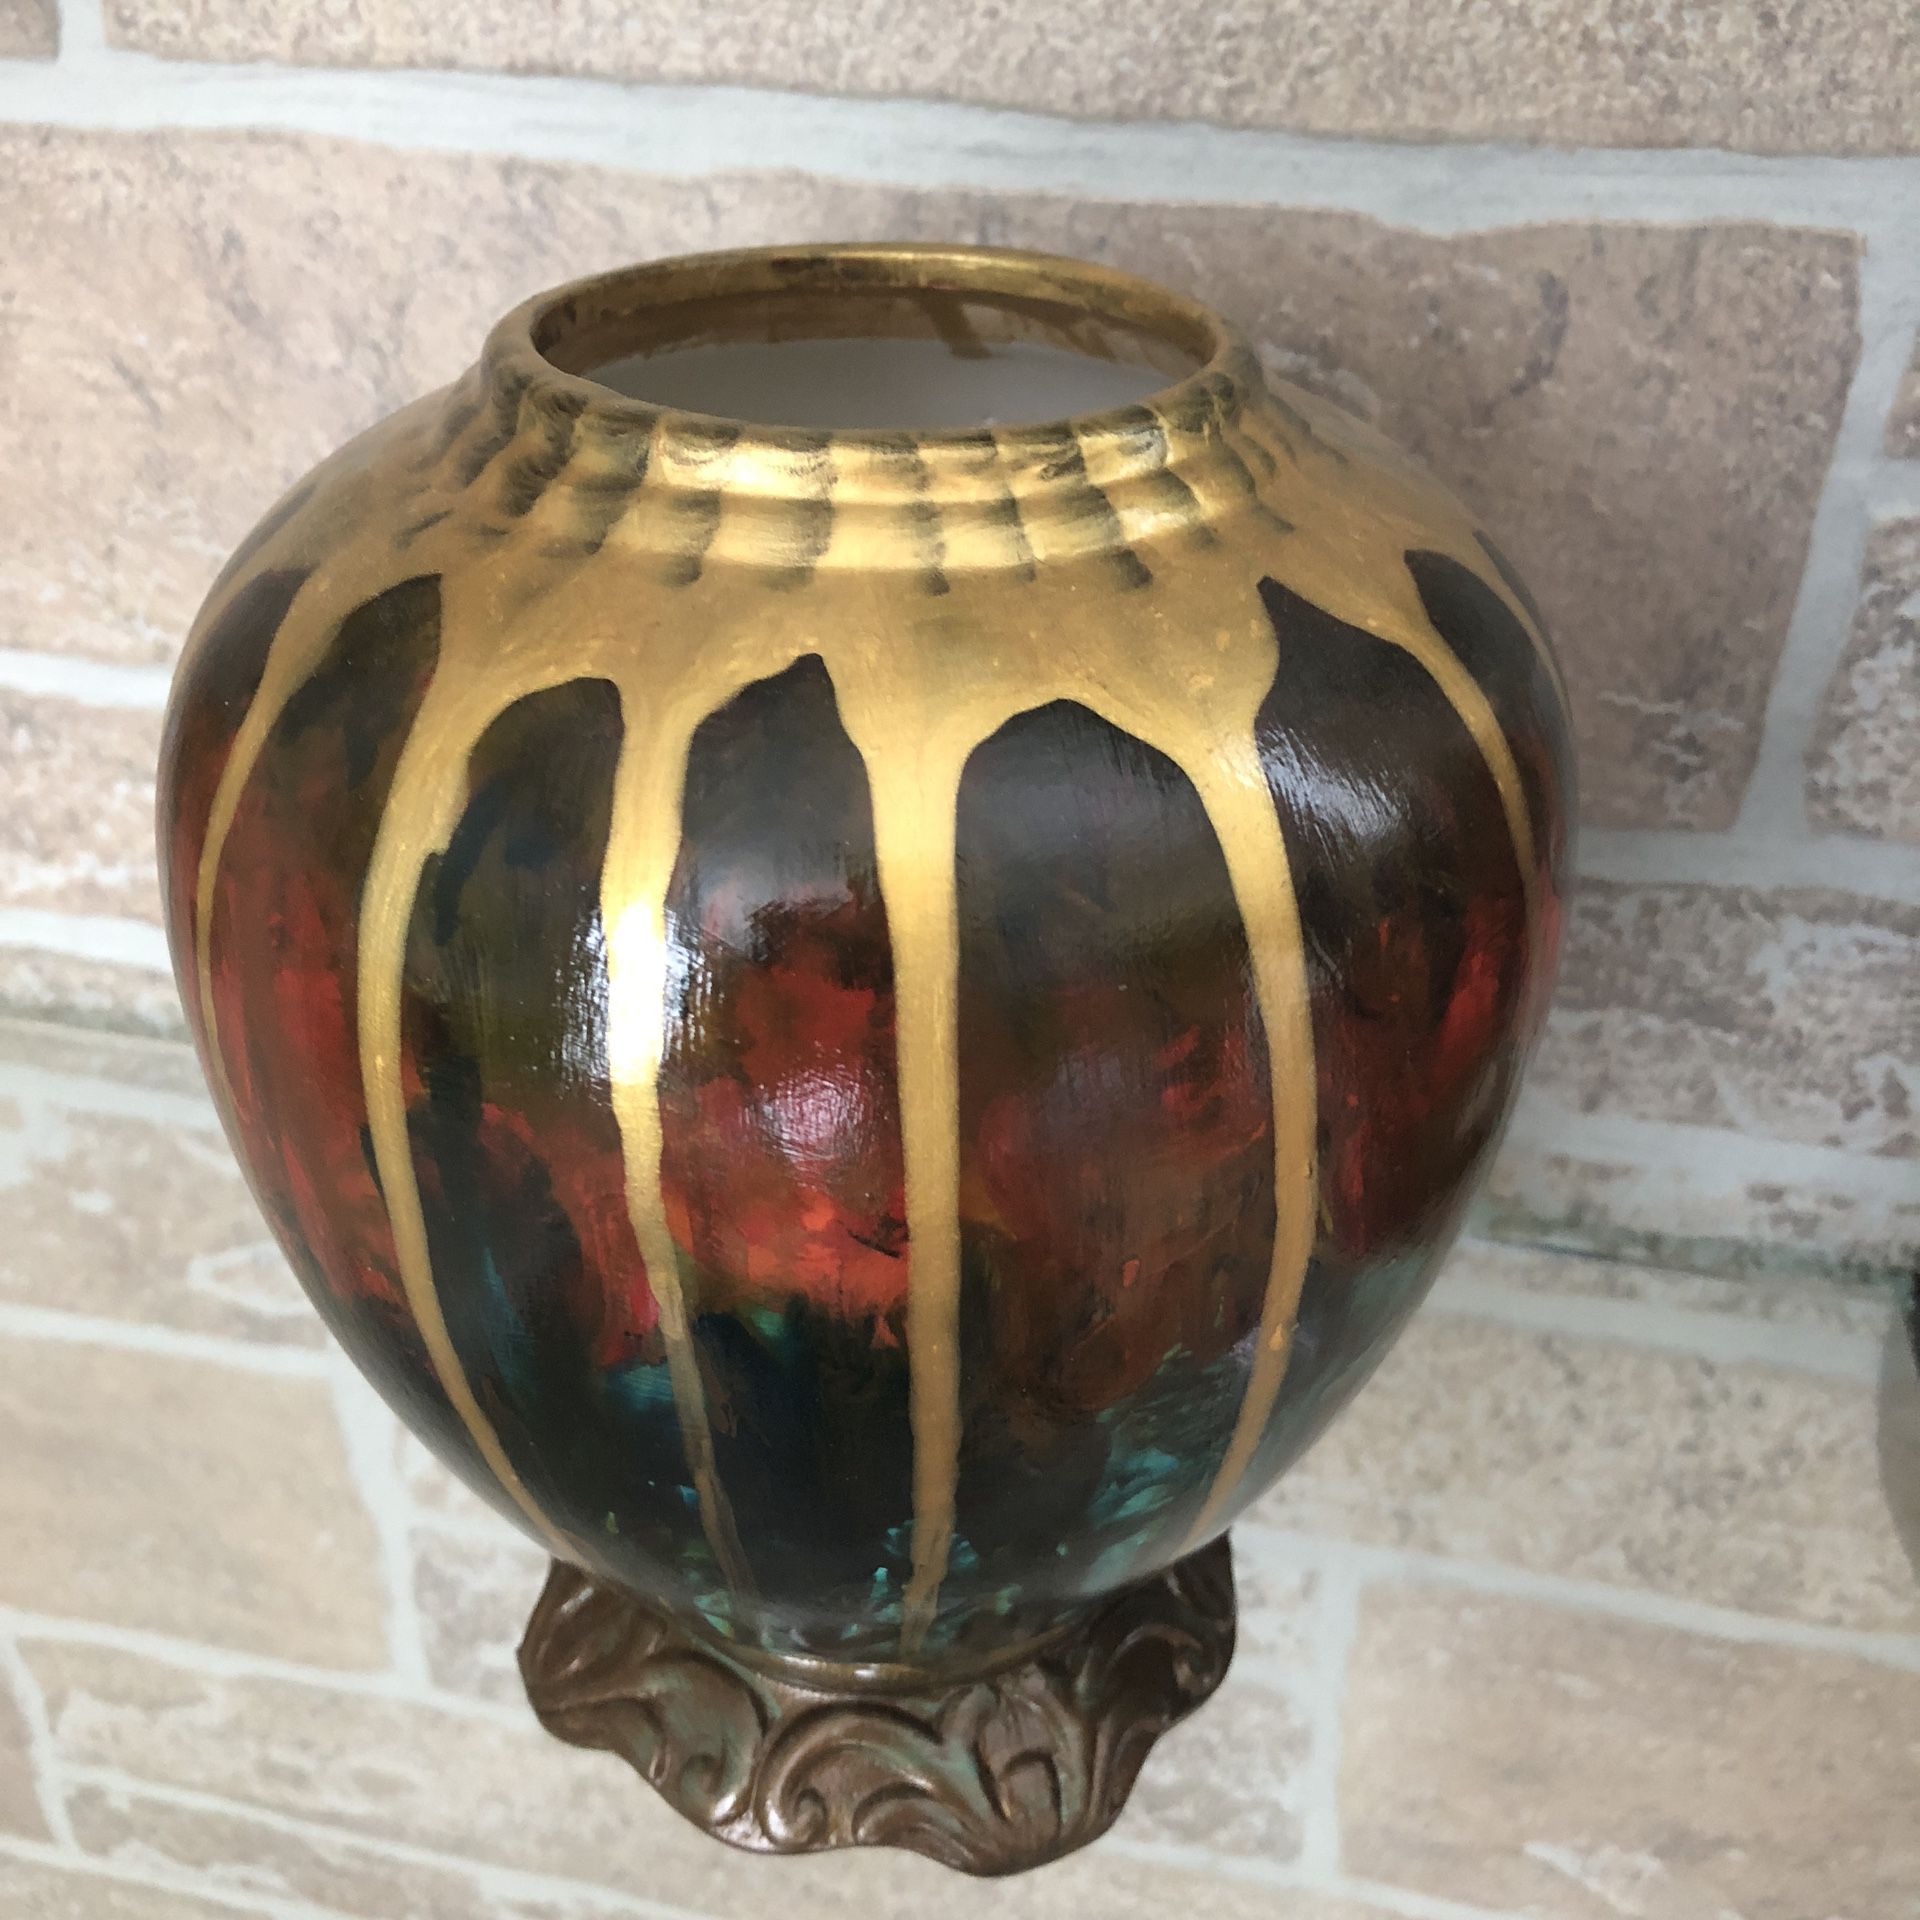 Hand made / hand painted ceramic vase